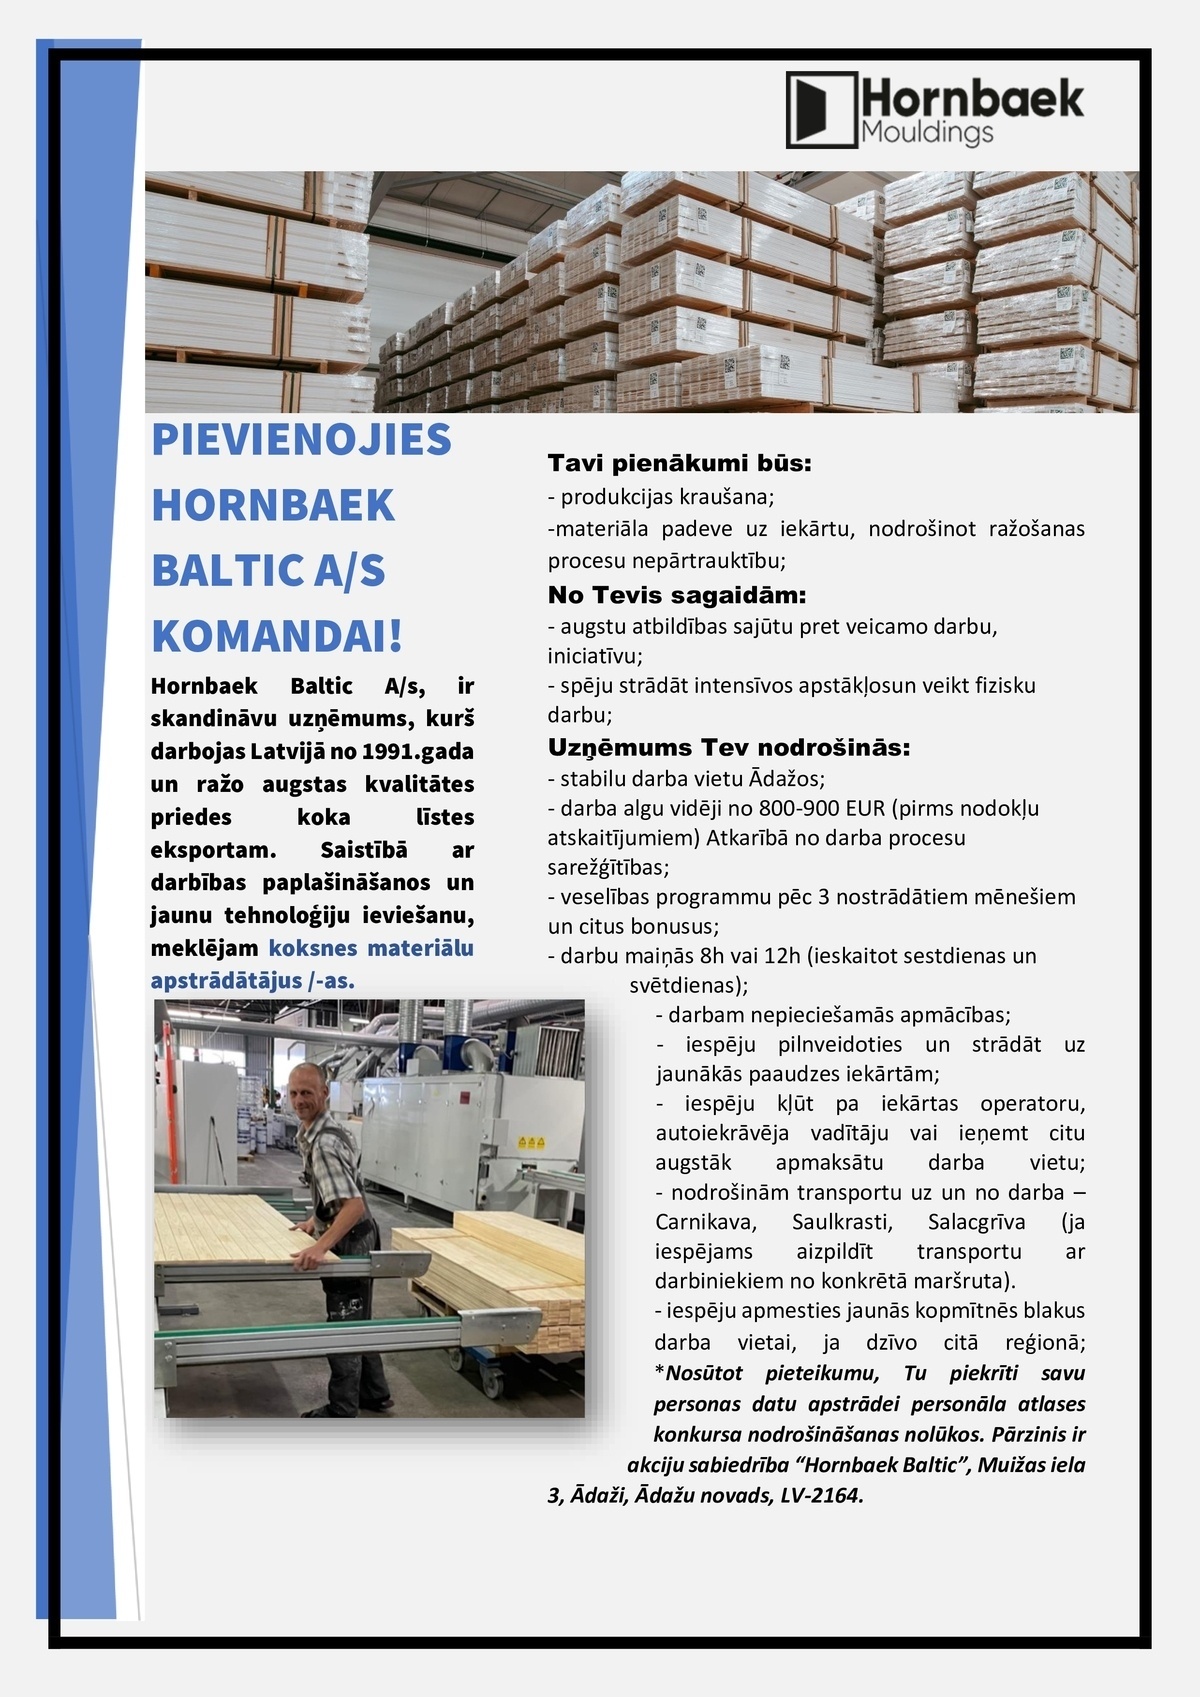 Hornbaek Baltic, AS Koksnes materiālu apstrādātājs/-a